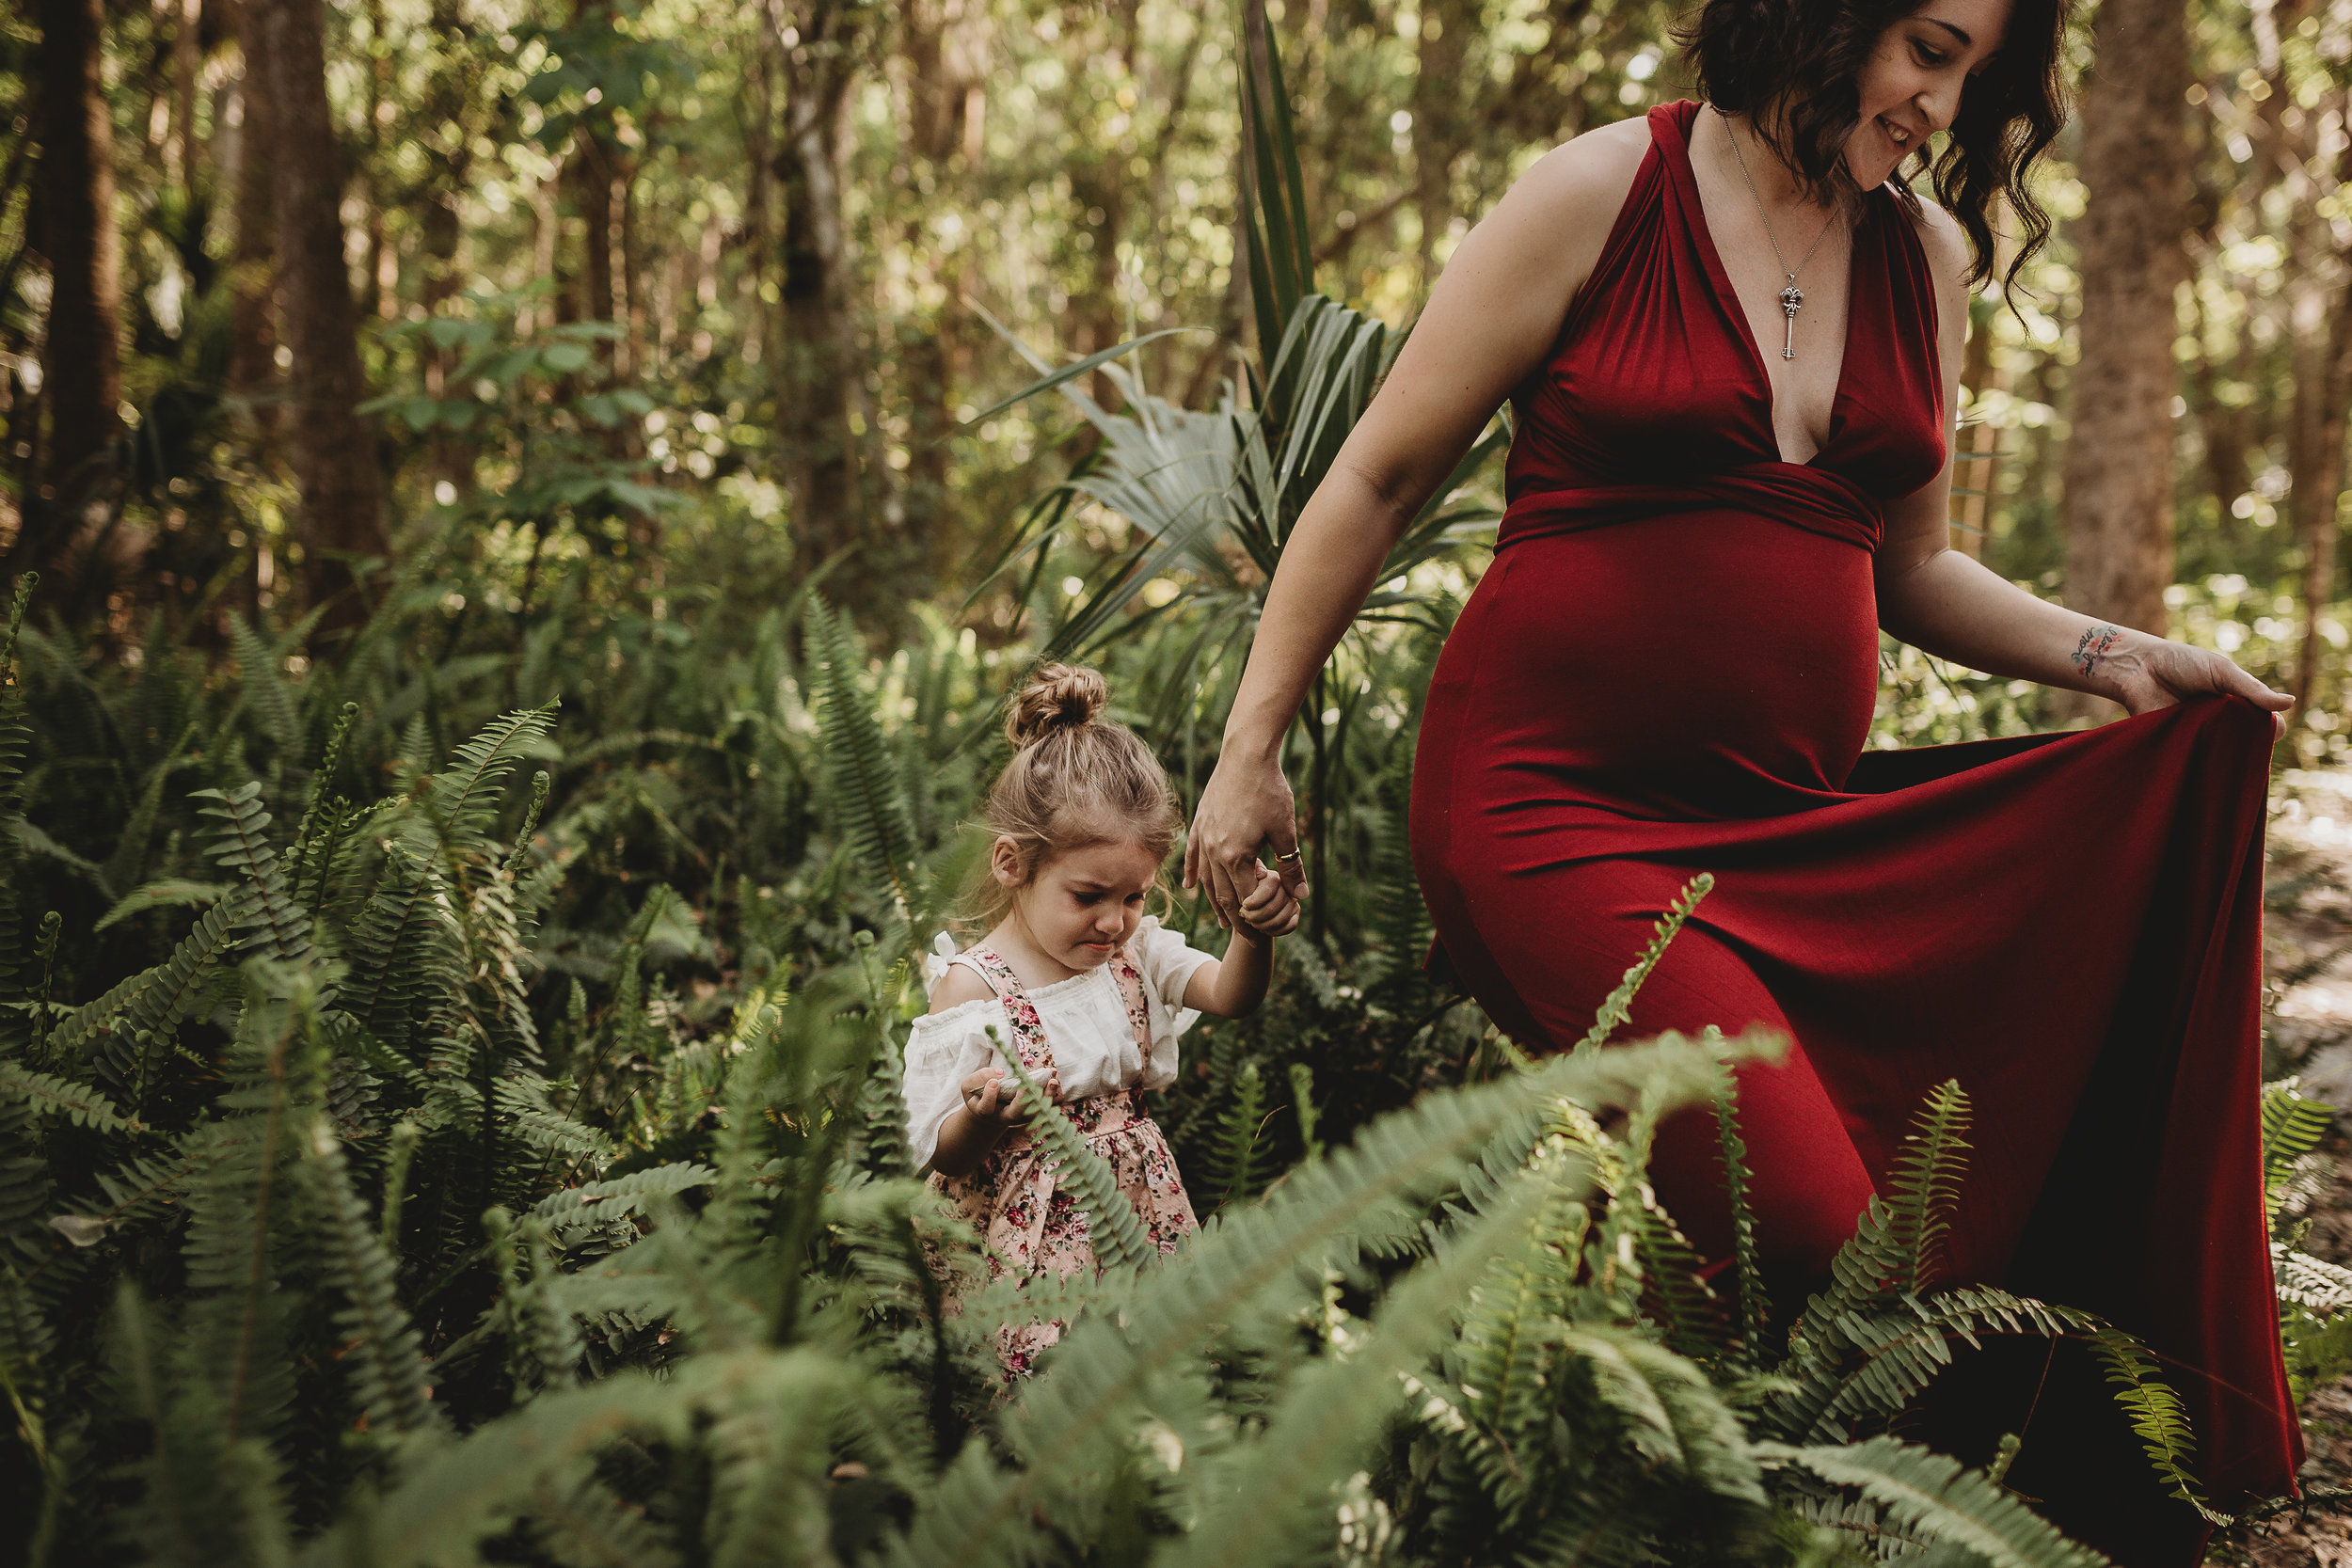 Daytona Beach Maternity photographer capturing emotive images at Sugar Mill Gardens in Port Orange